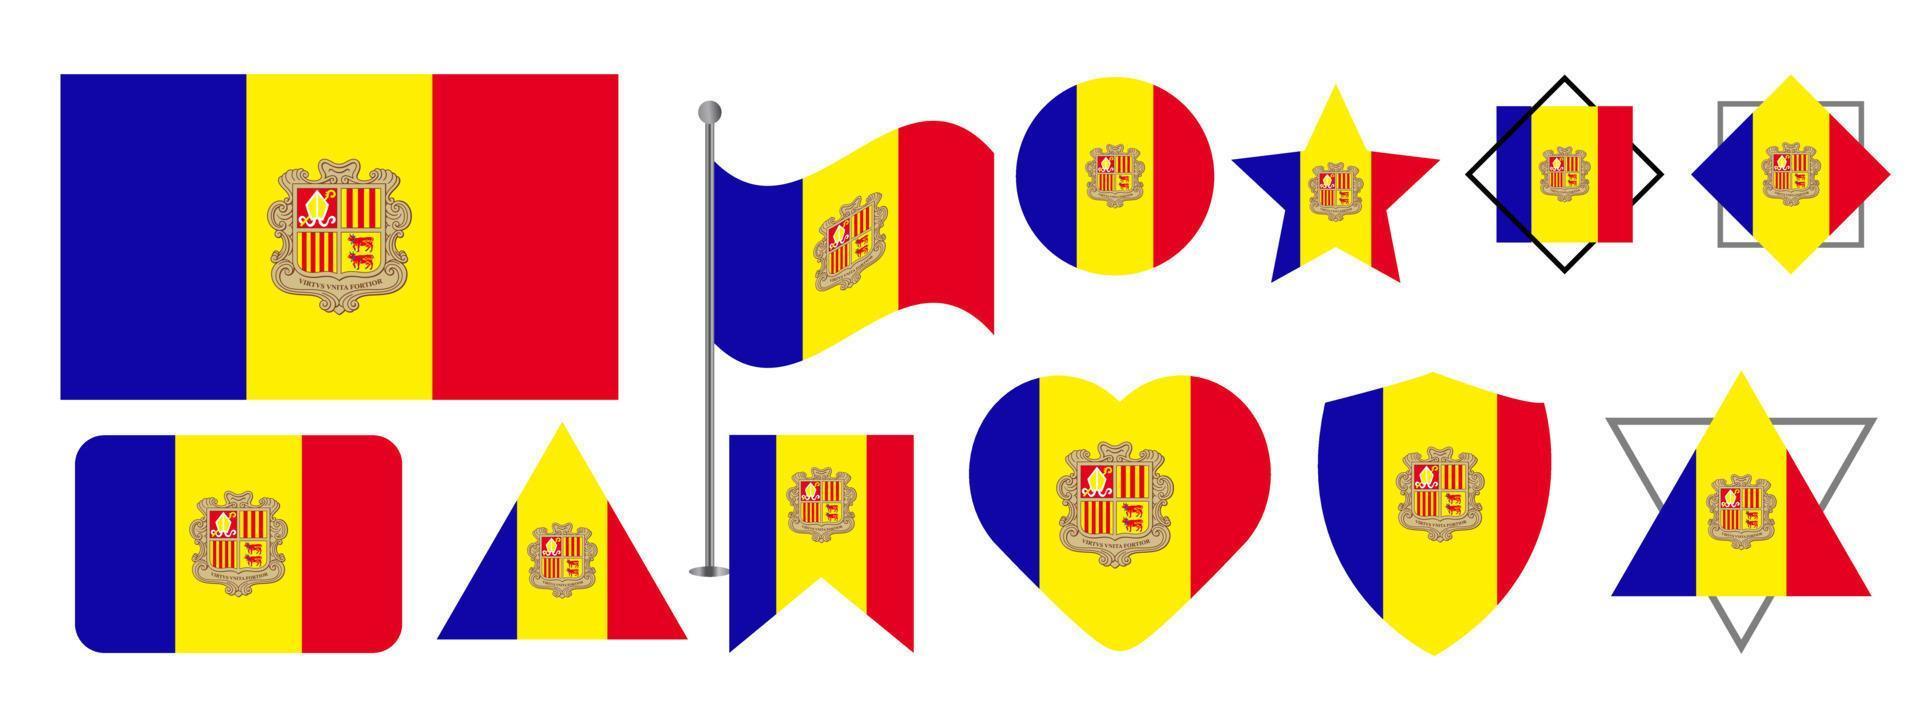 Andorra flag design. Andorra national flag vector design set. Andorra flag vector illustration